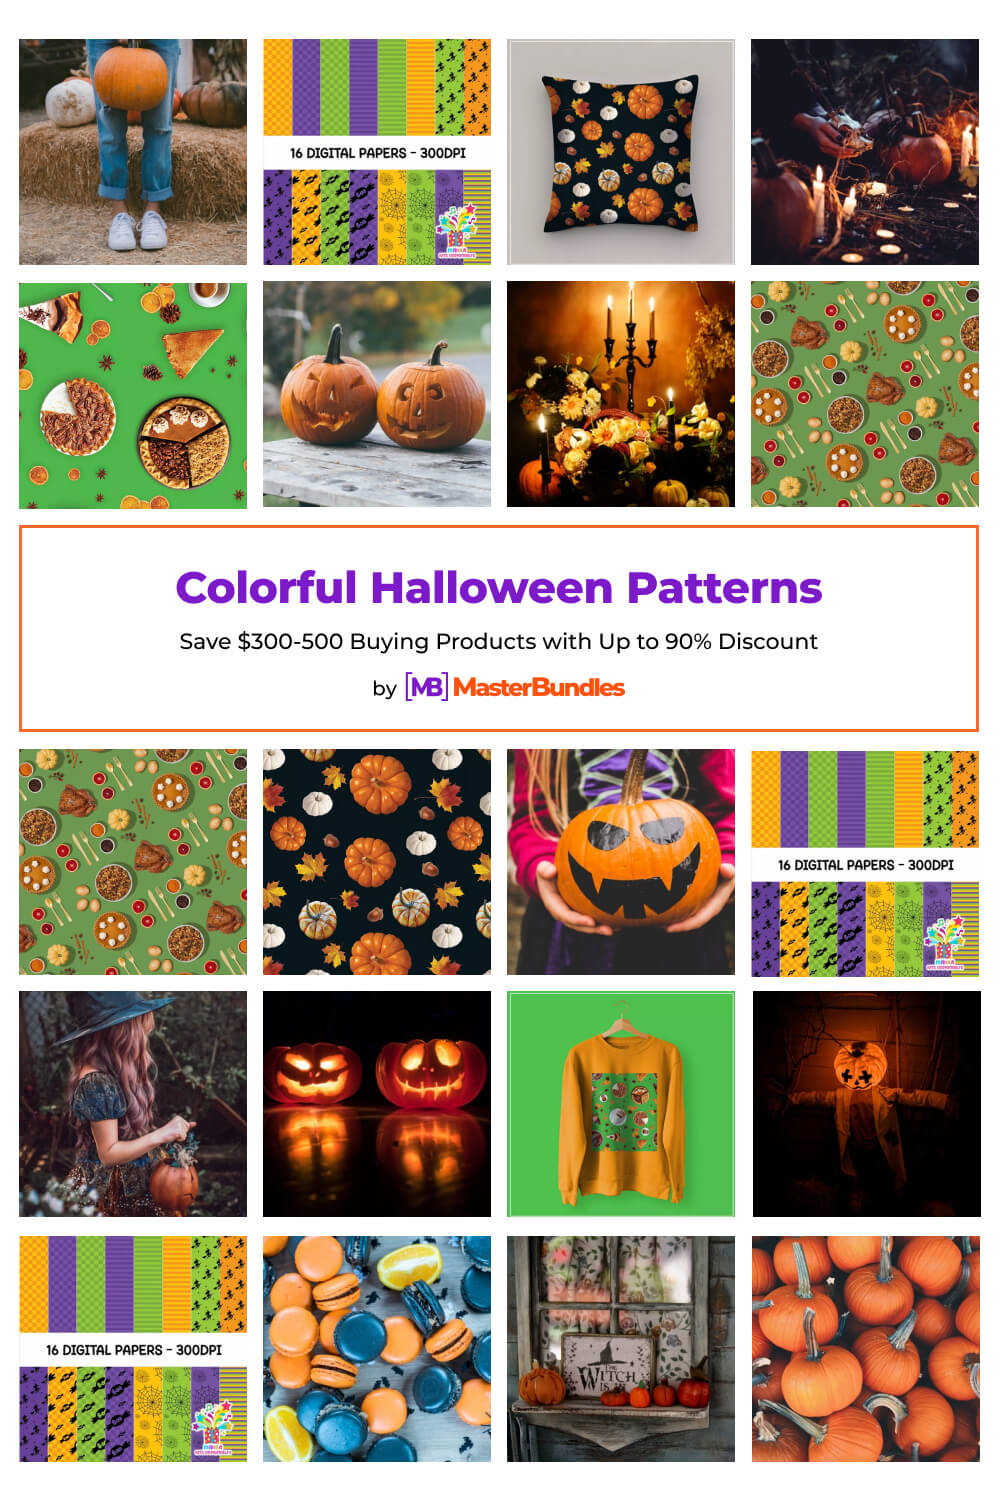 colorful halloween patterns pinterest image.